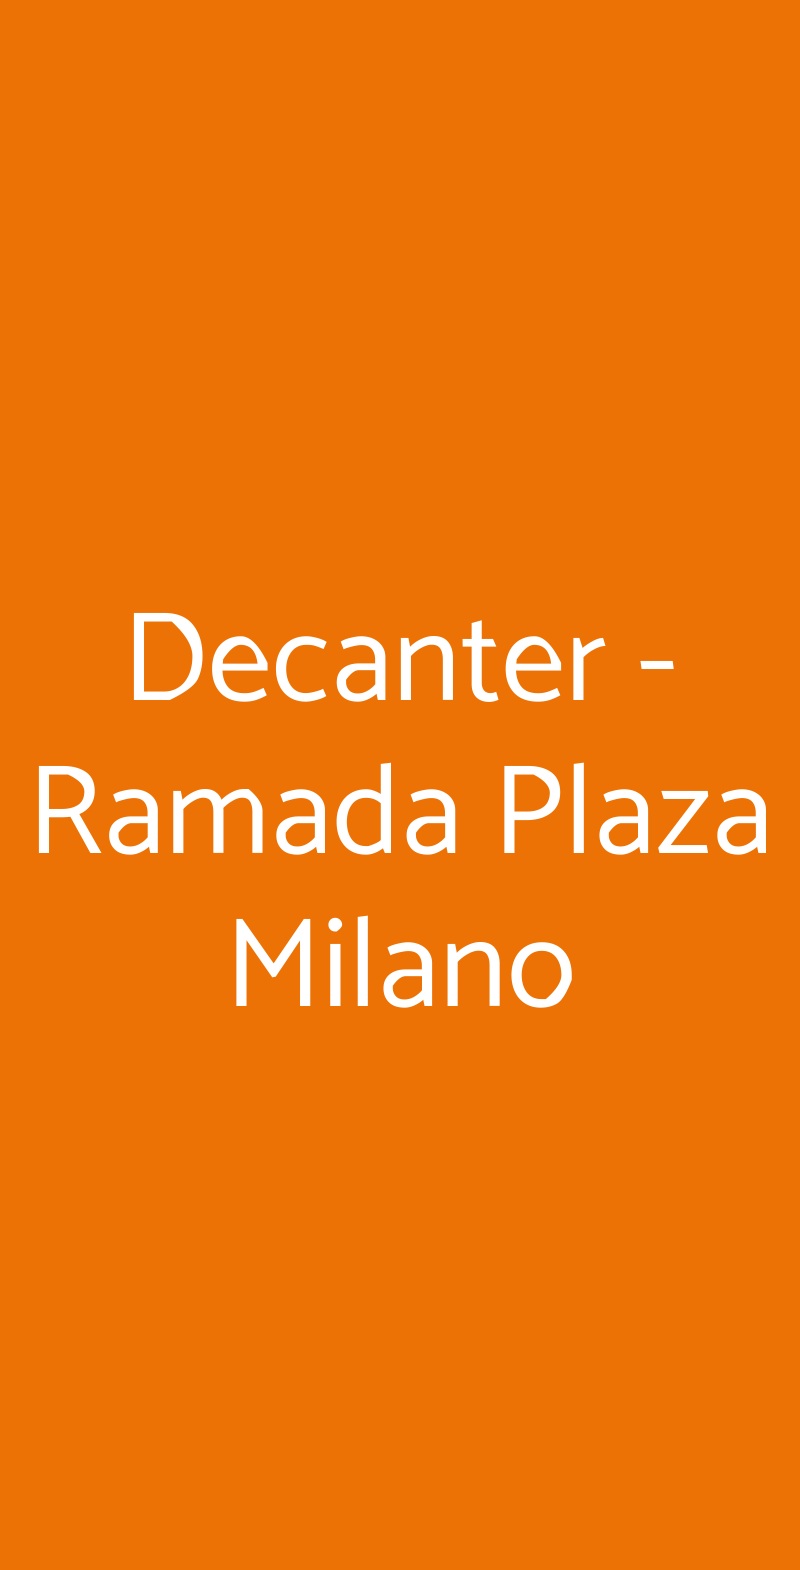 Decanter - Ramada Plaza Milano Milano menù 1 pagina